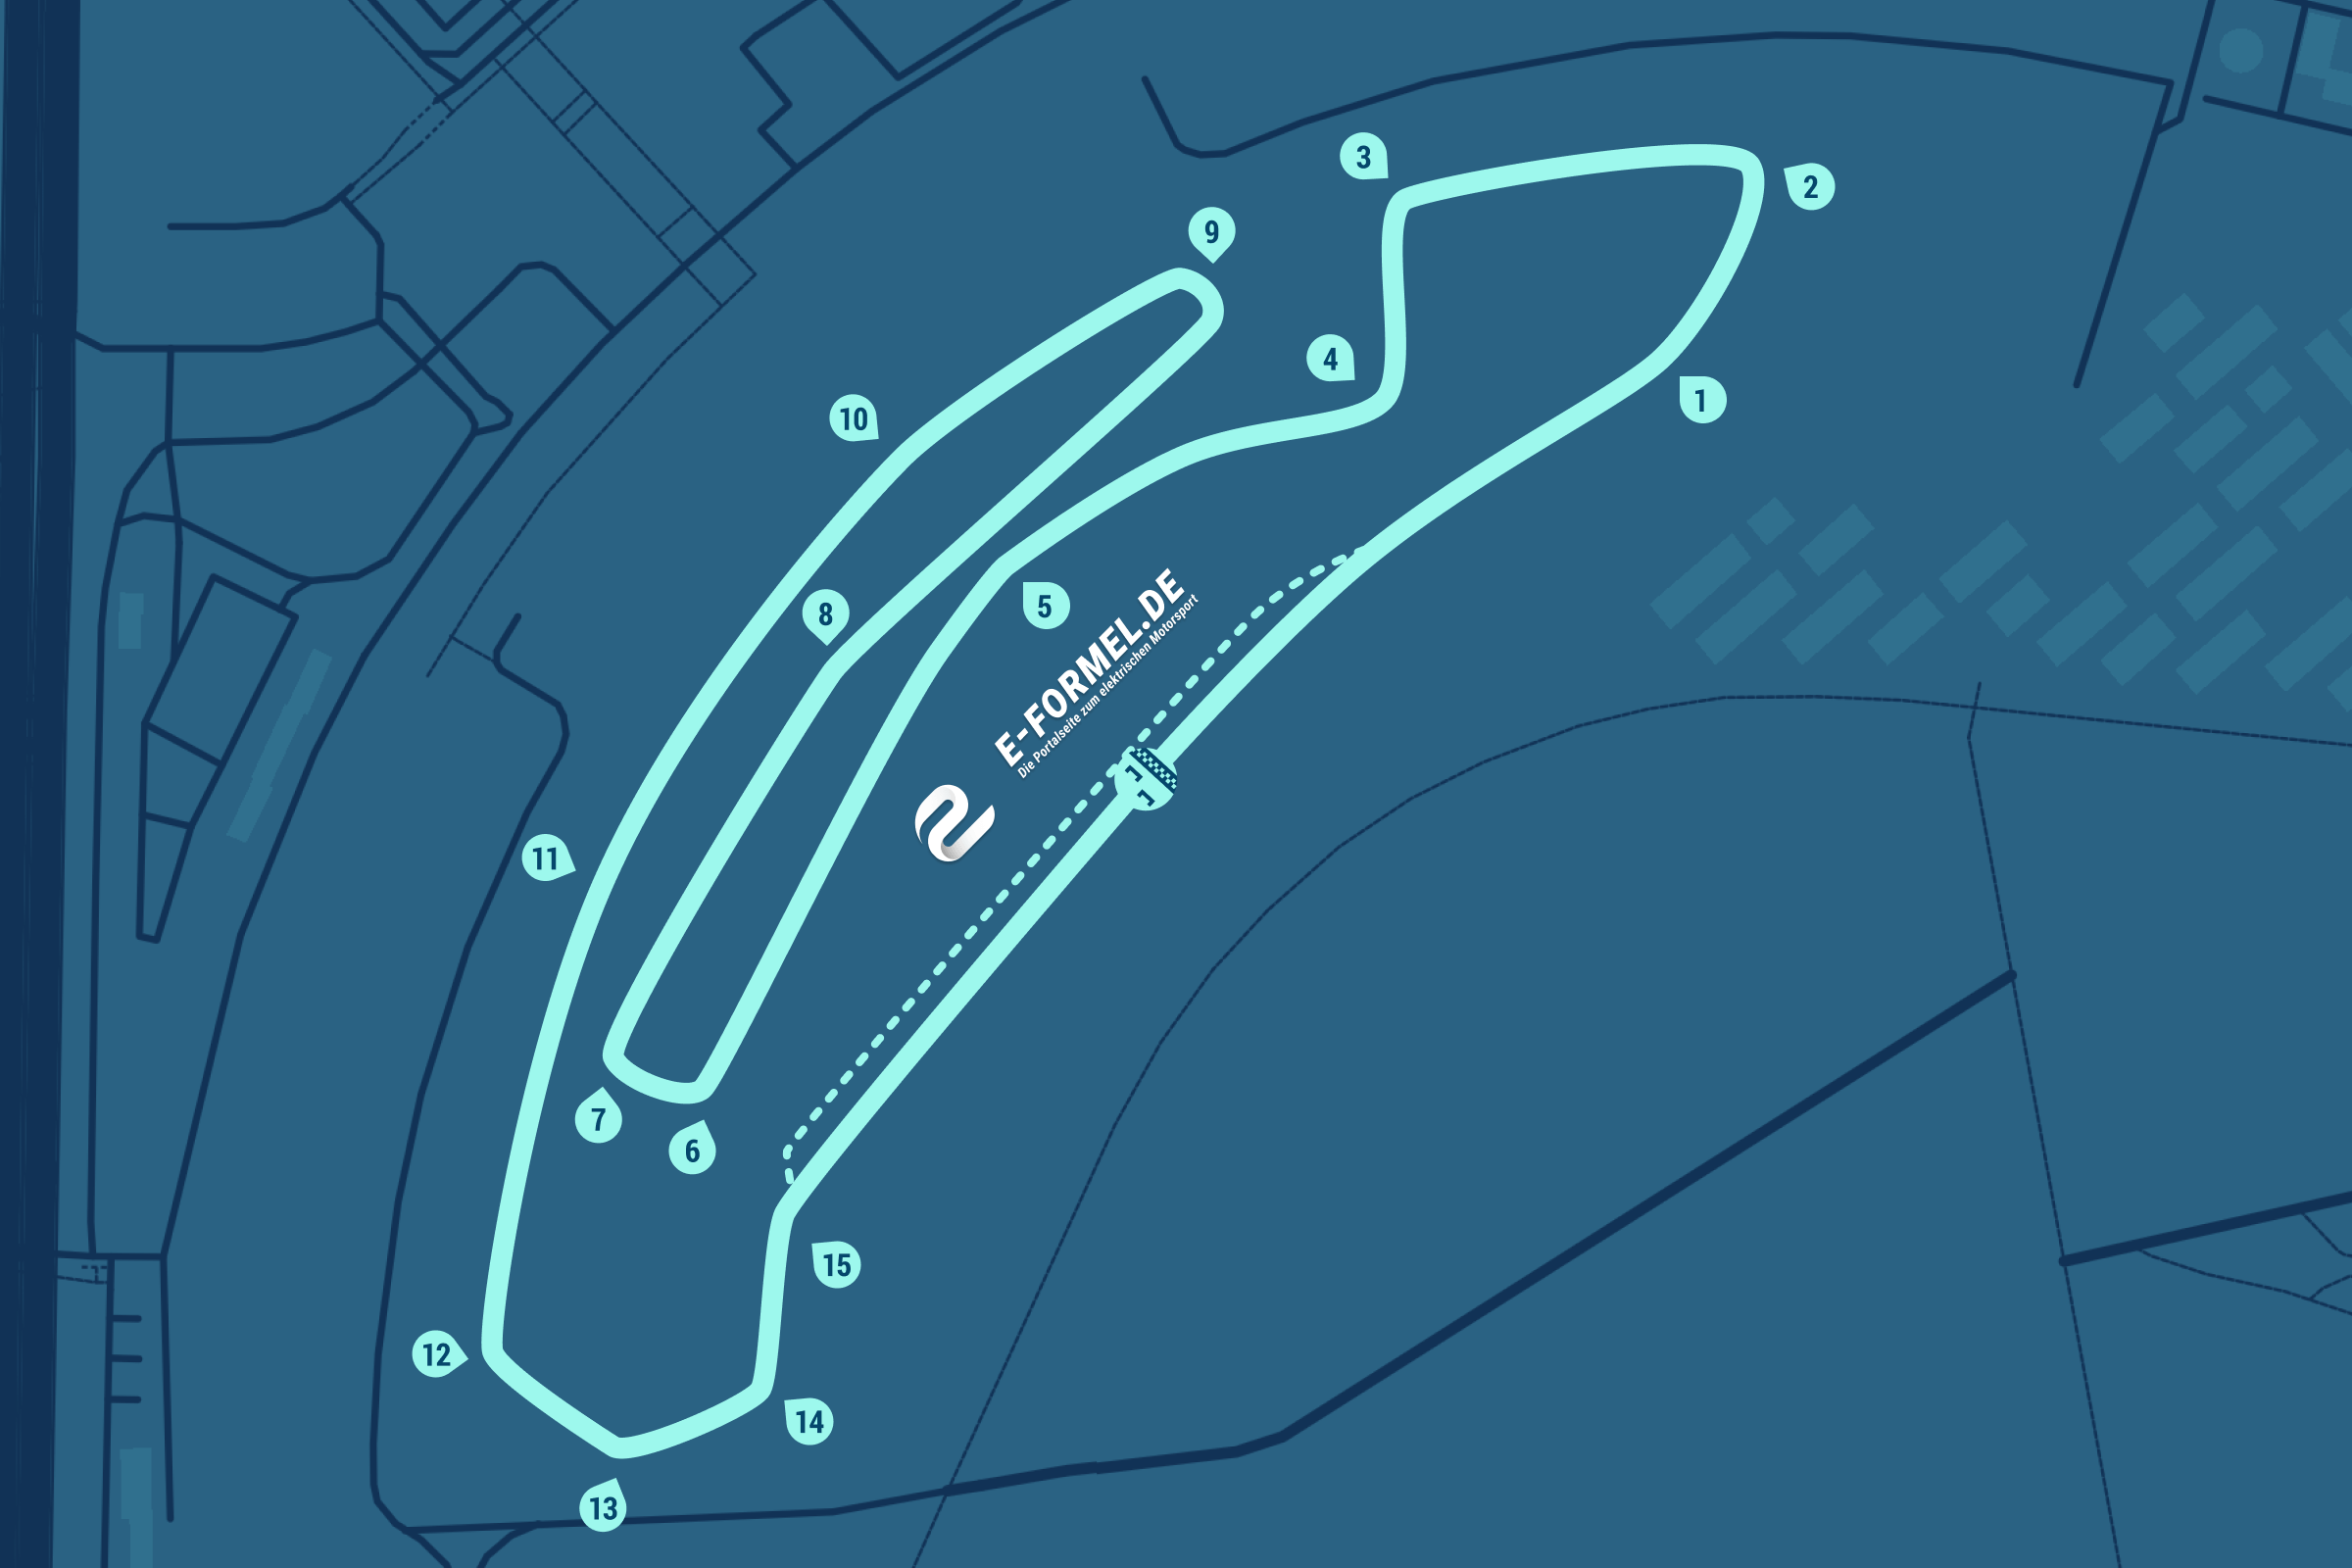 s10-berlin-formula-e-track-layout